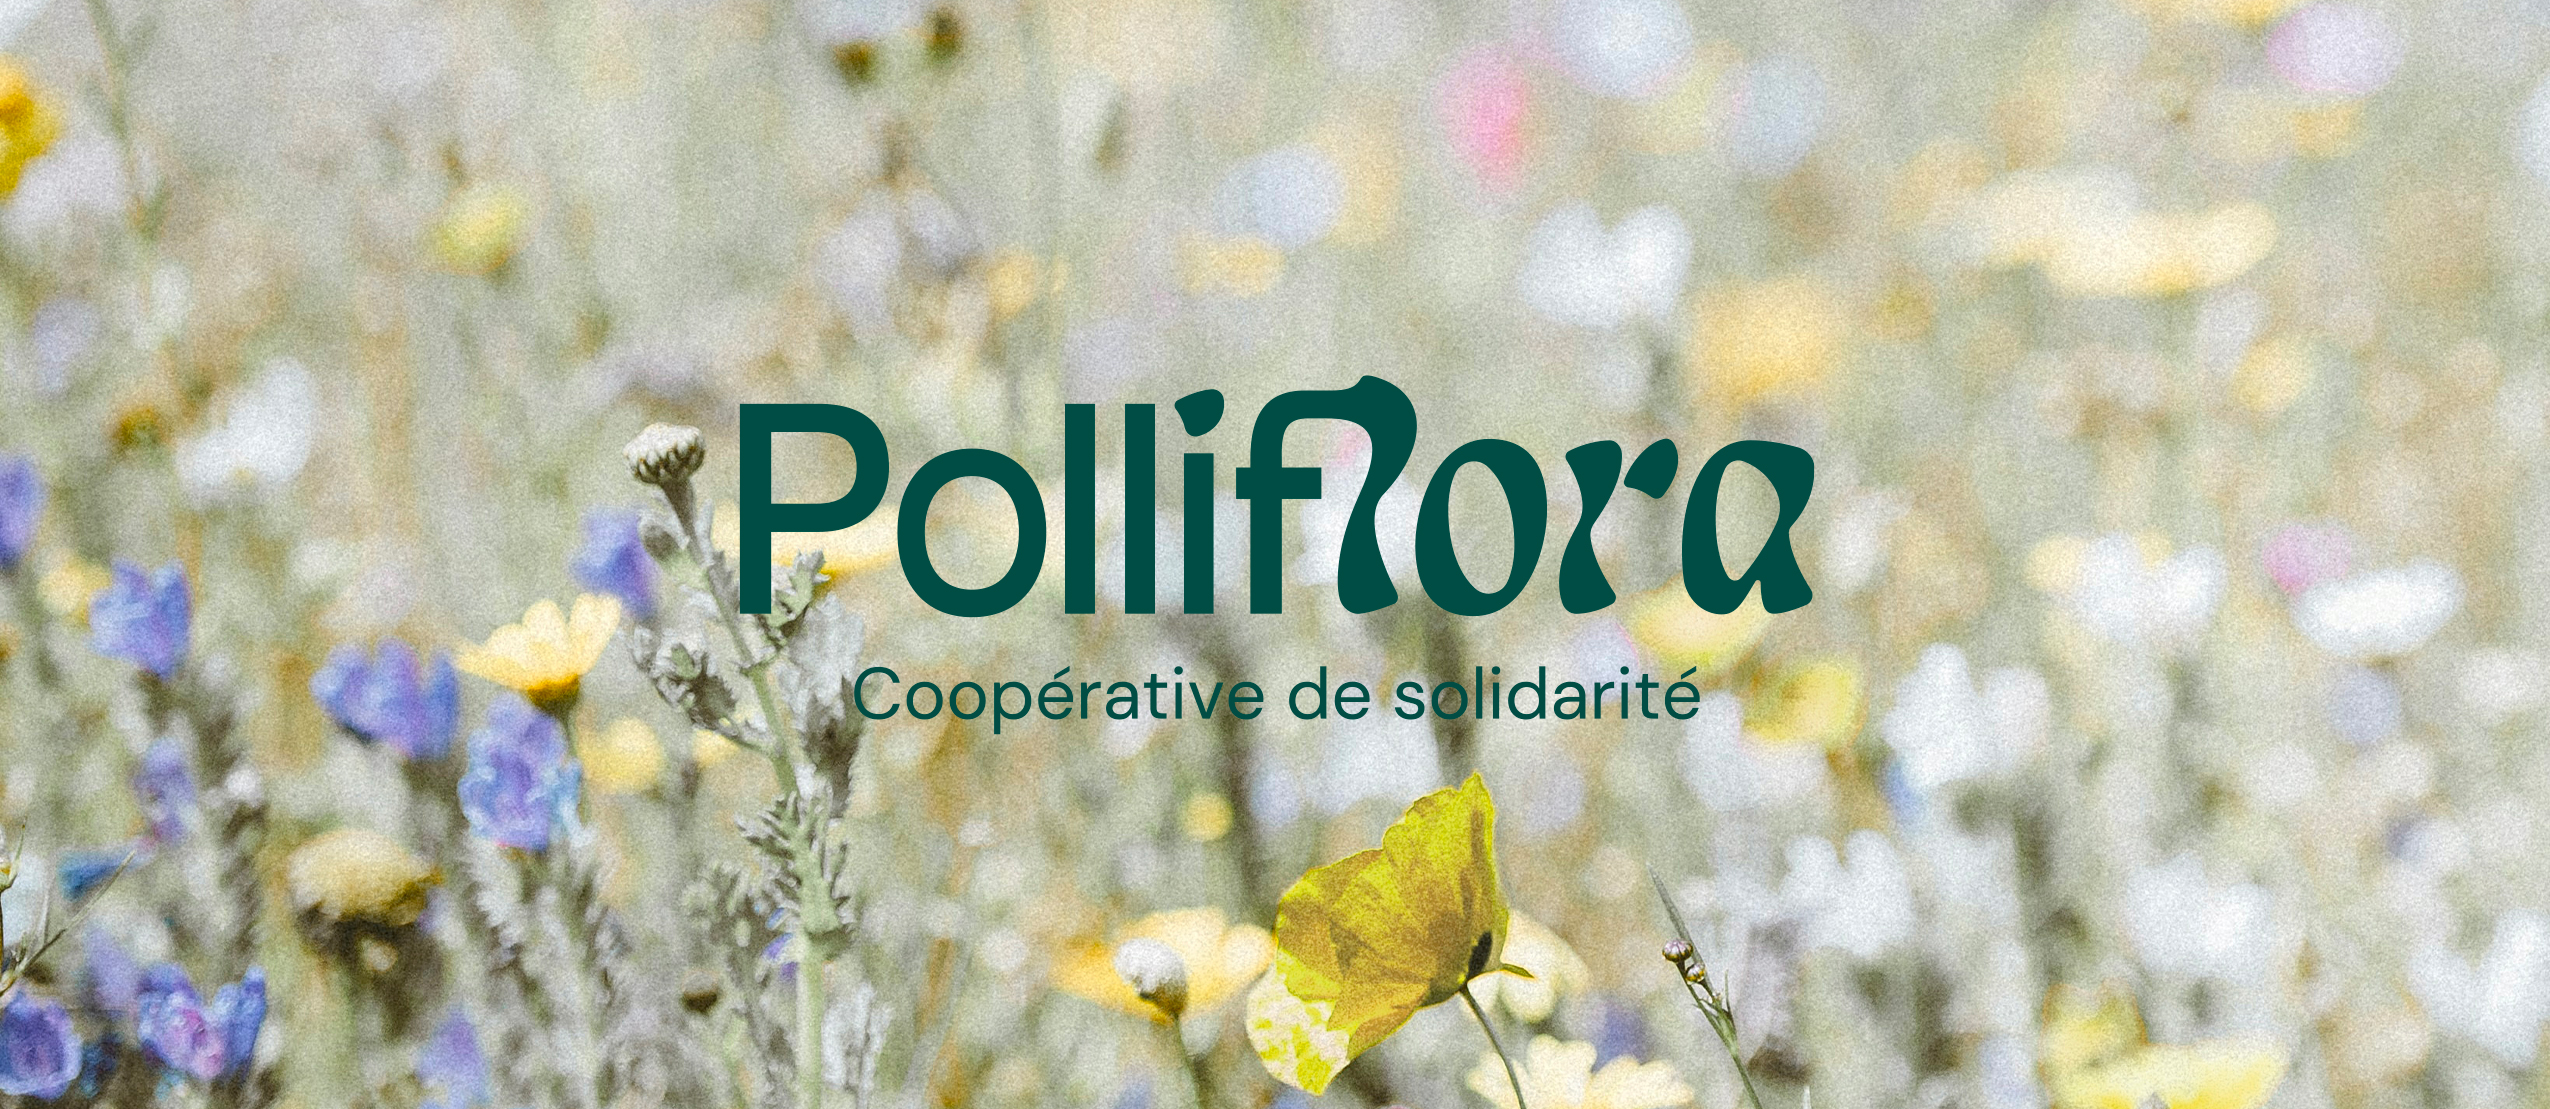 Polliflora logo on an image of flowers